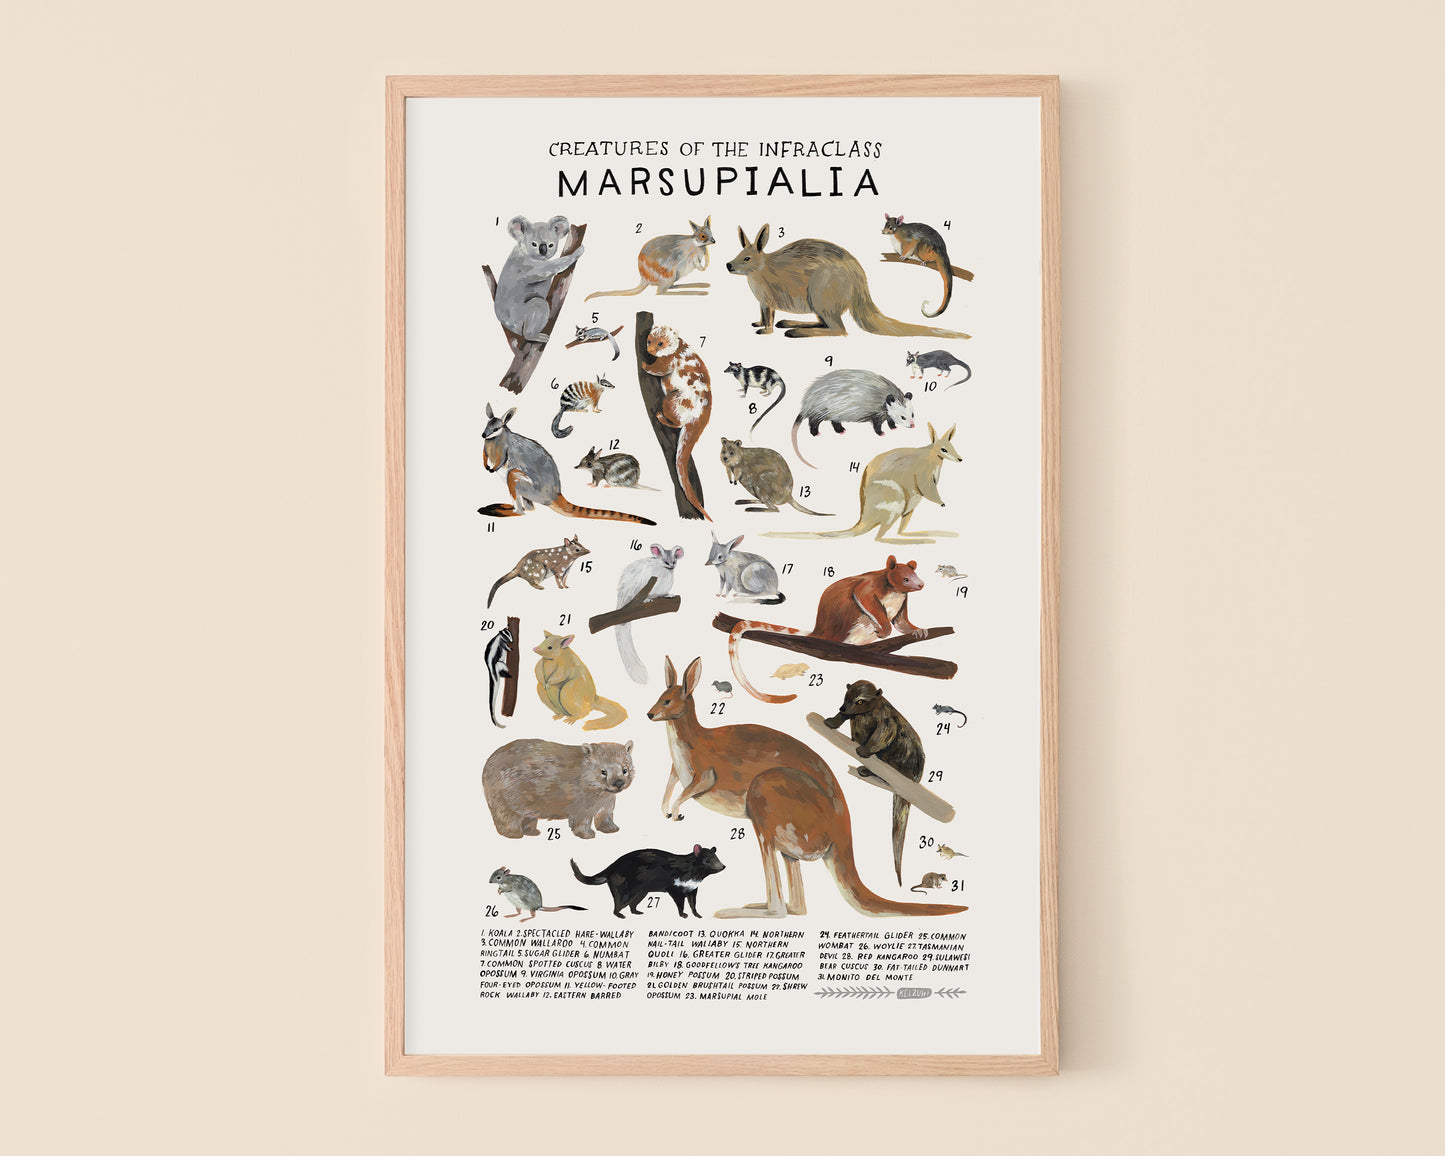 Marsupials art print- Creatures of the Infraclass Marsupialia